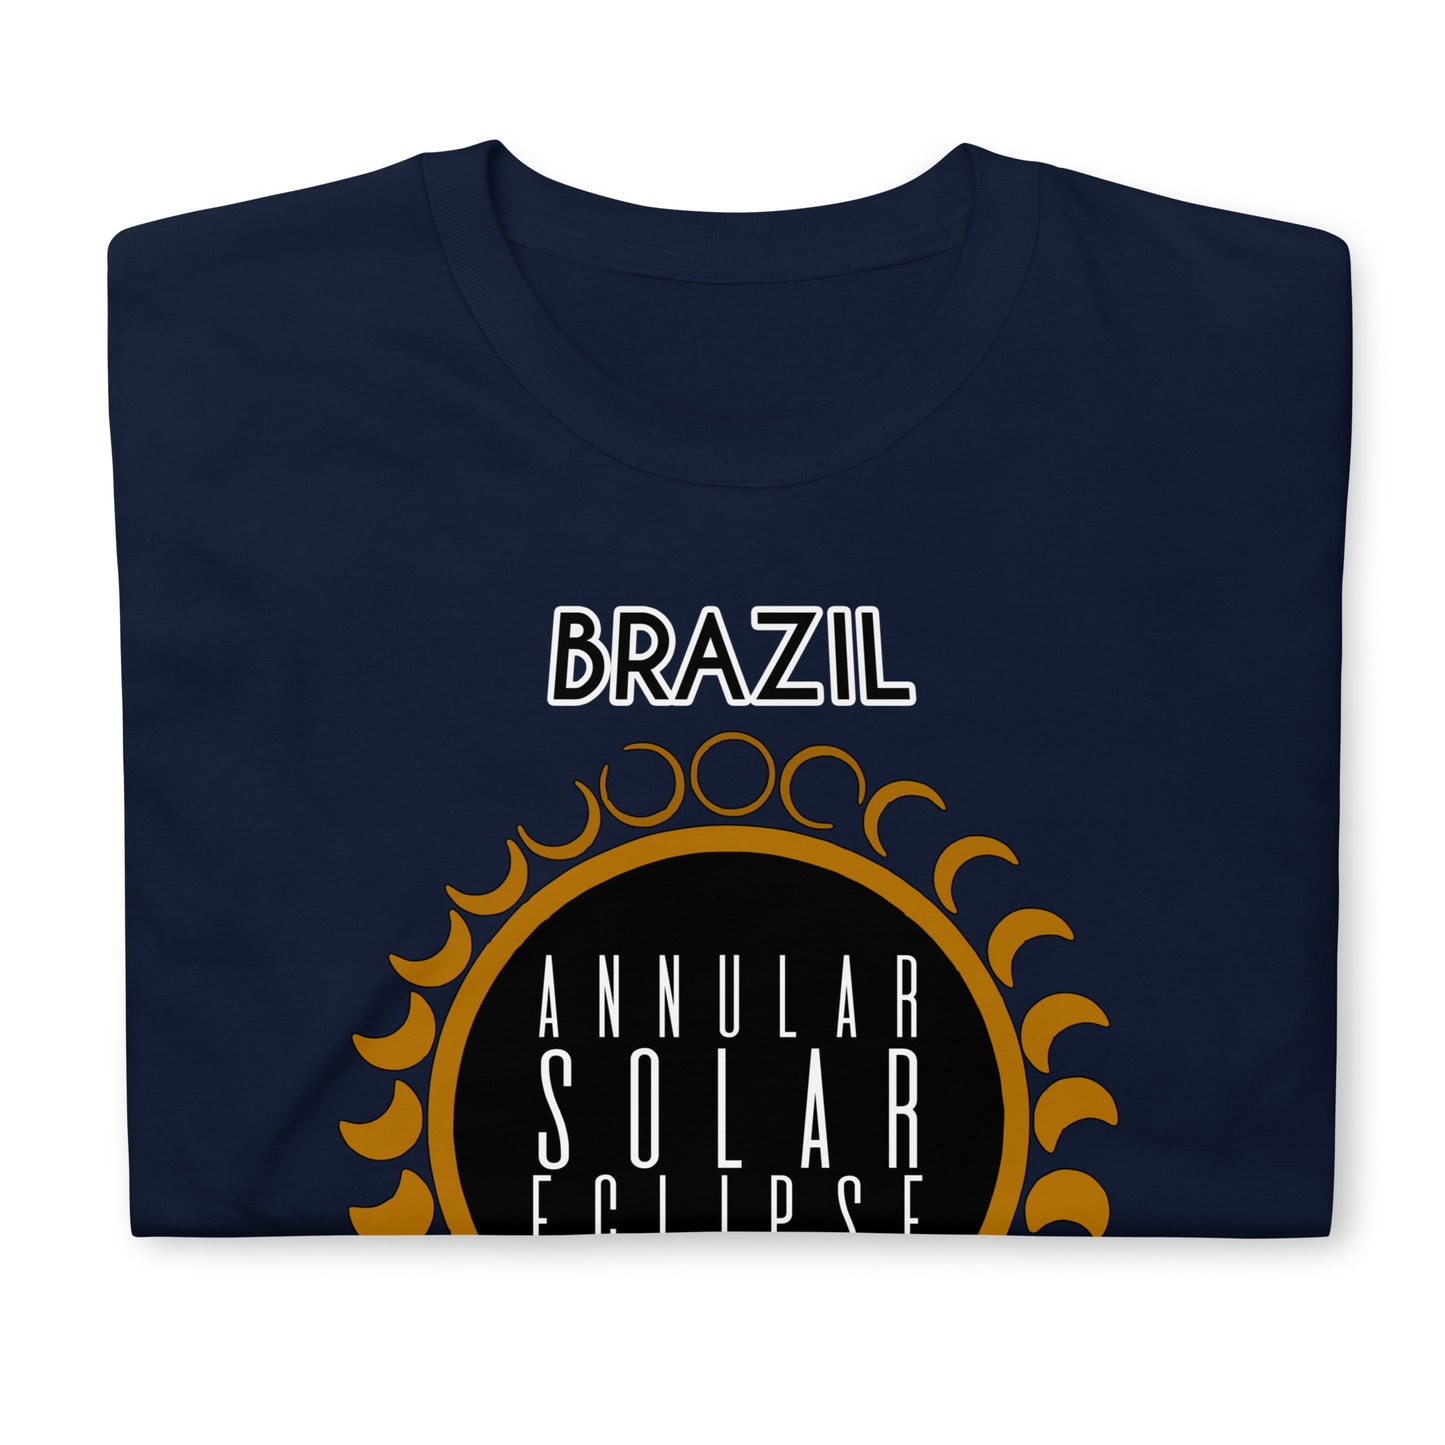 Annular Solar Eclipse - Brazil Rio Grande do Norte - Black Sun